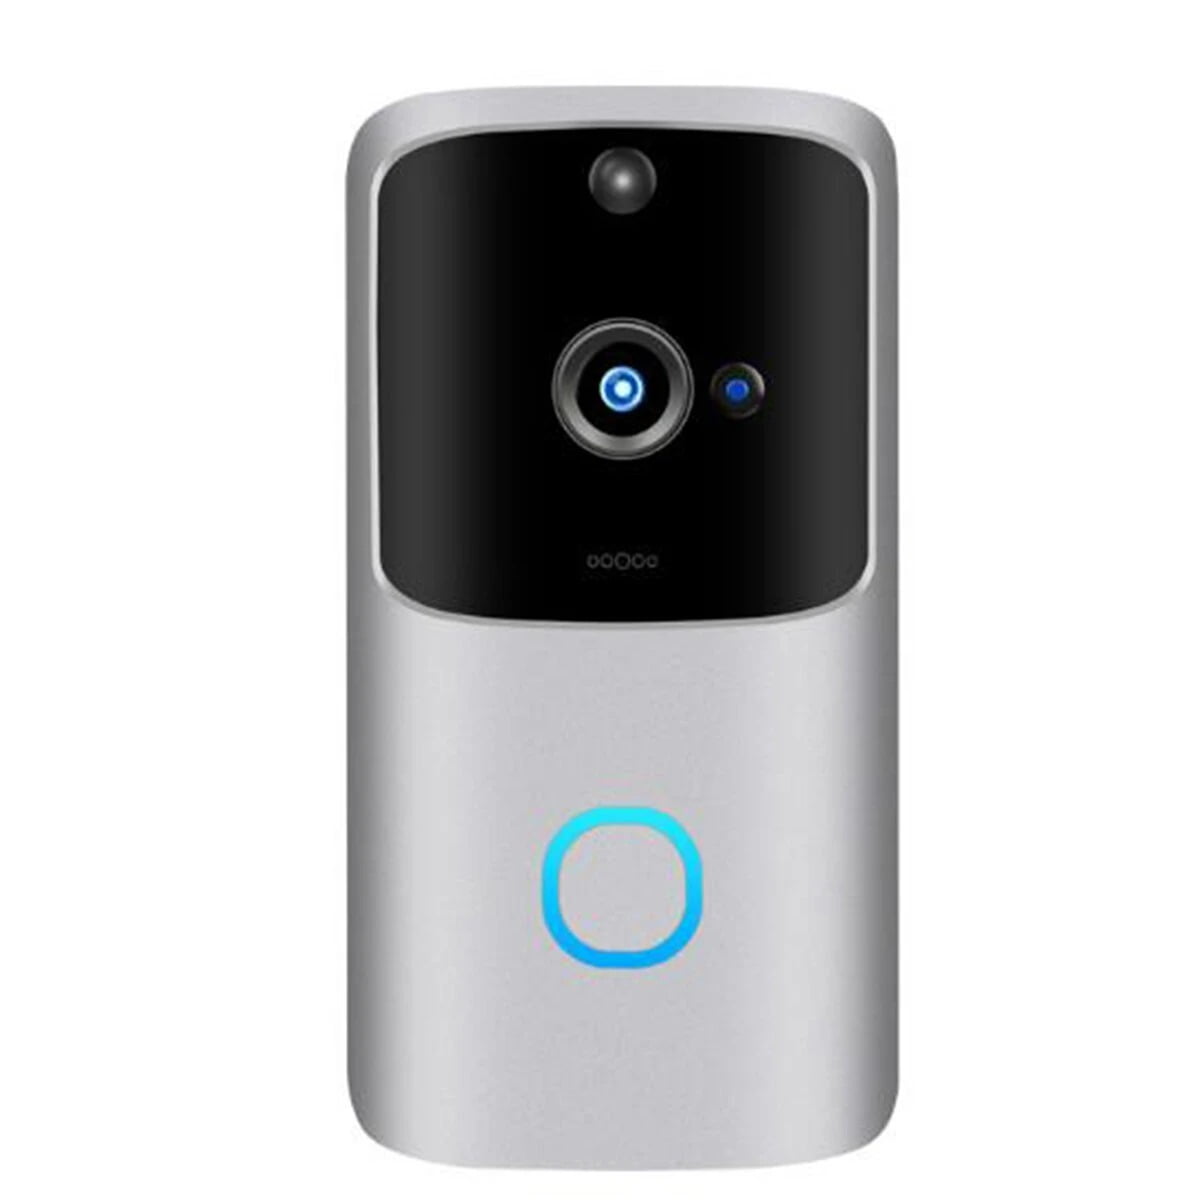 Firefly Smart Home SH01 Smart Doorbell